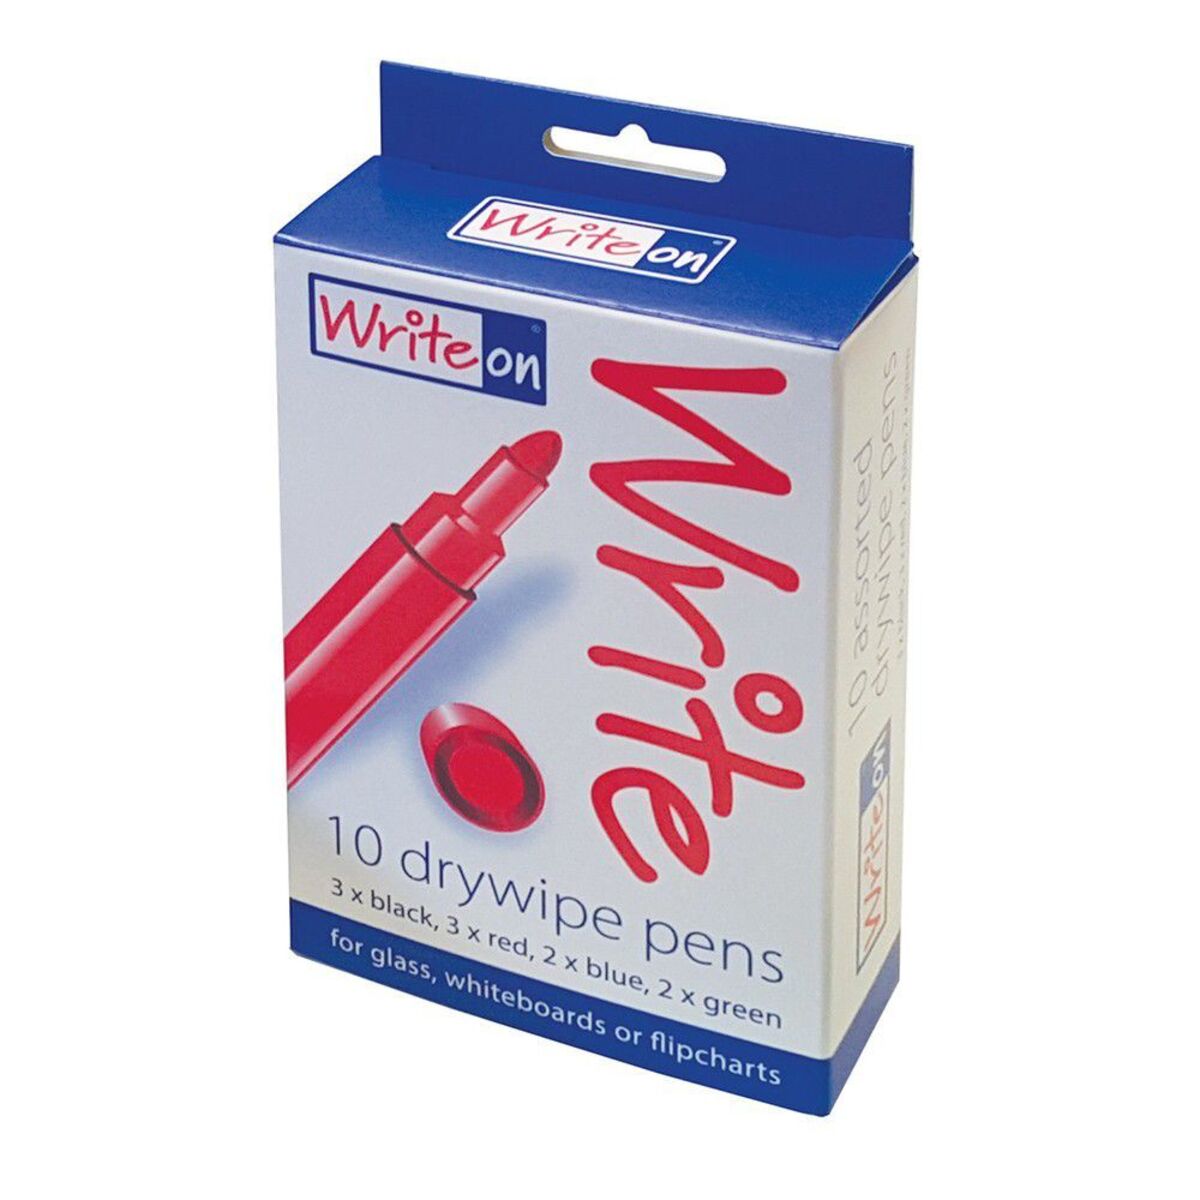 WriteOn Drywipe Pens.JPG